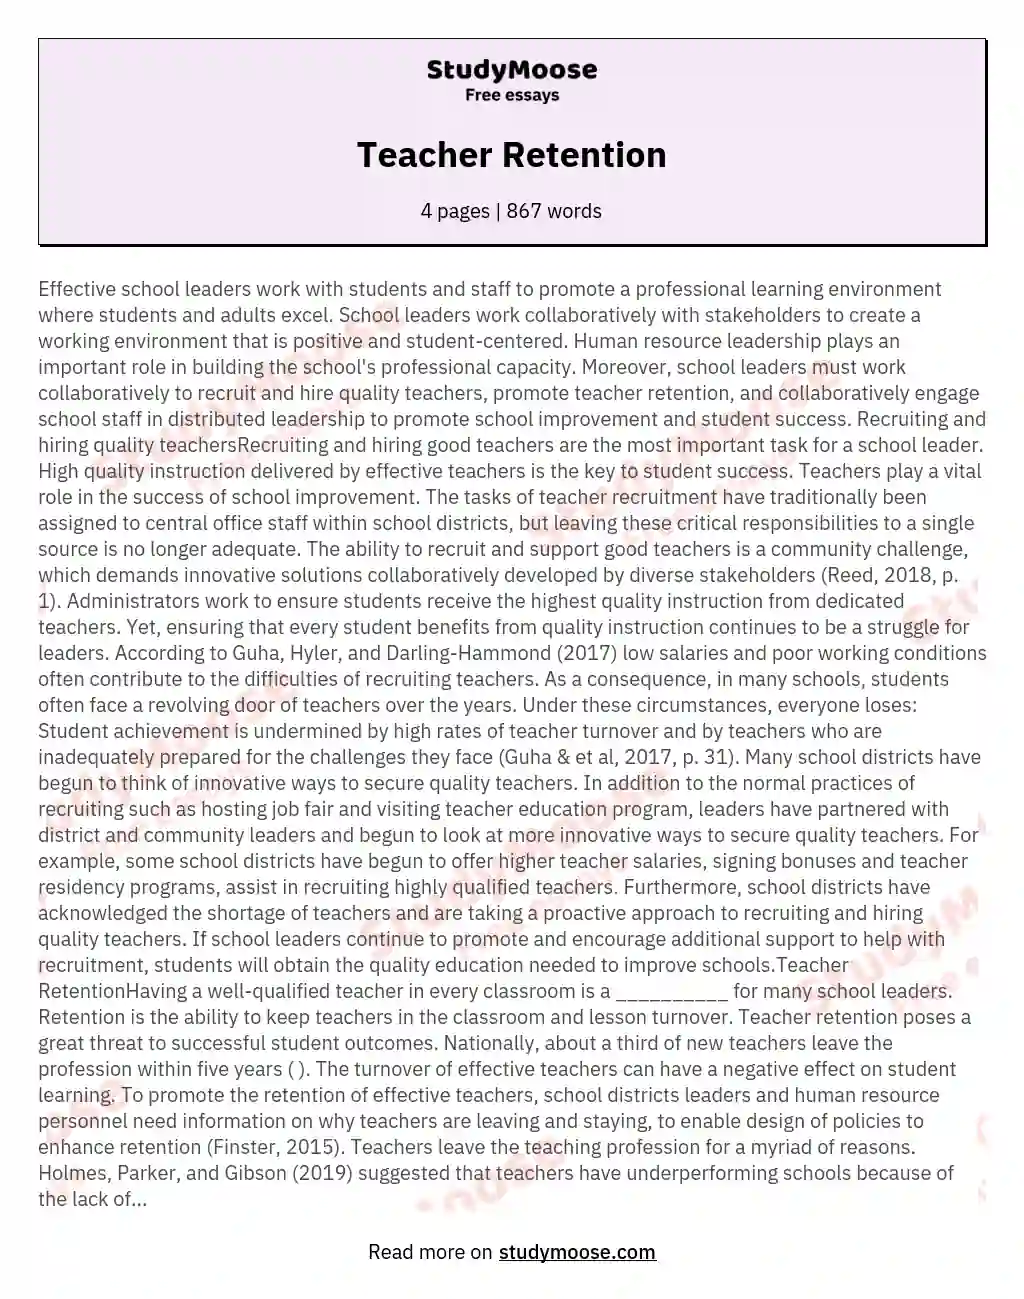 Teacher Retention essay